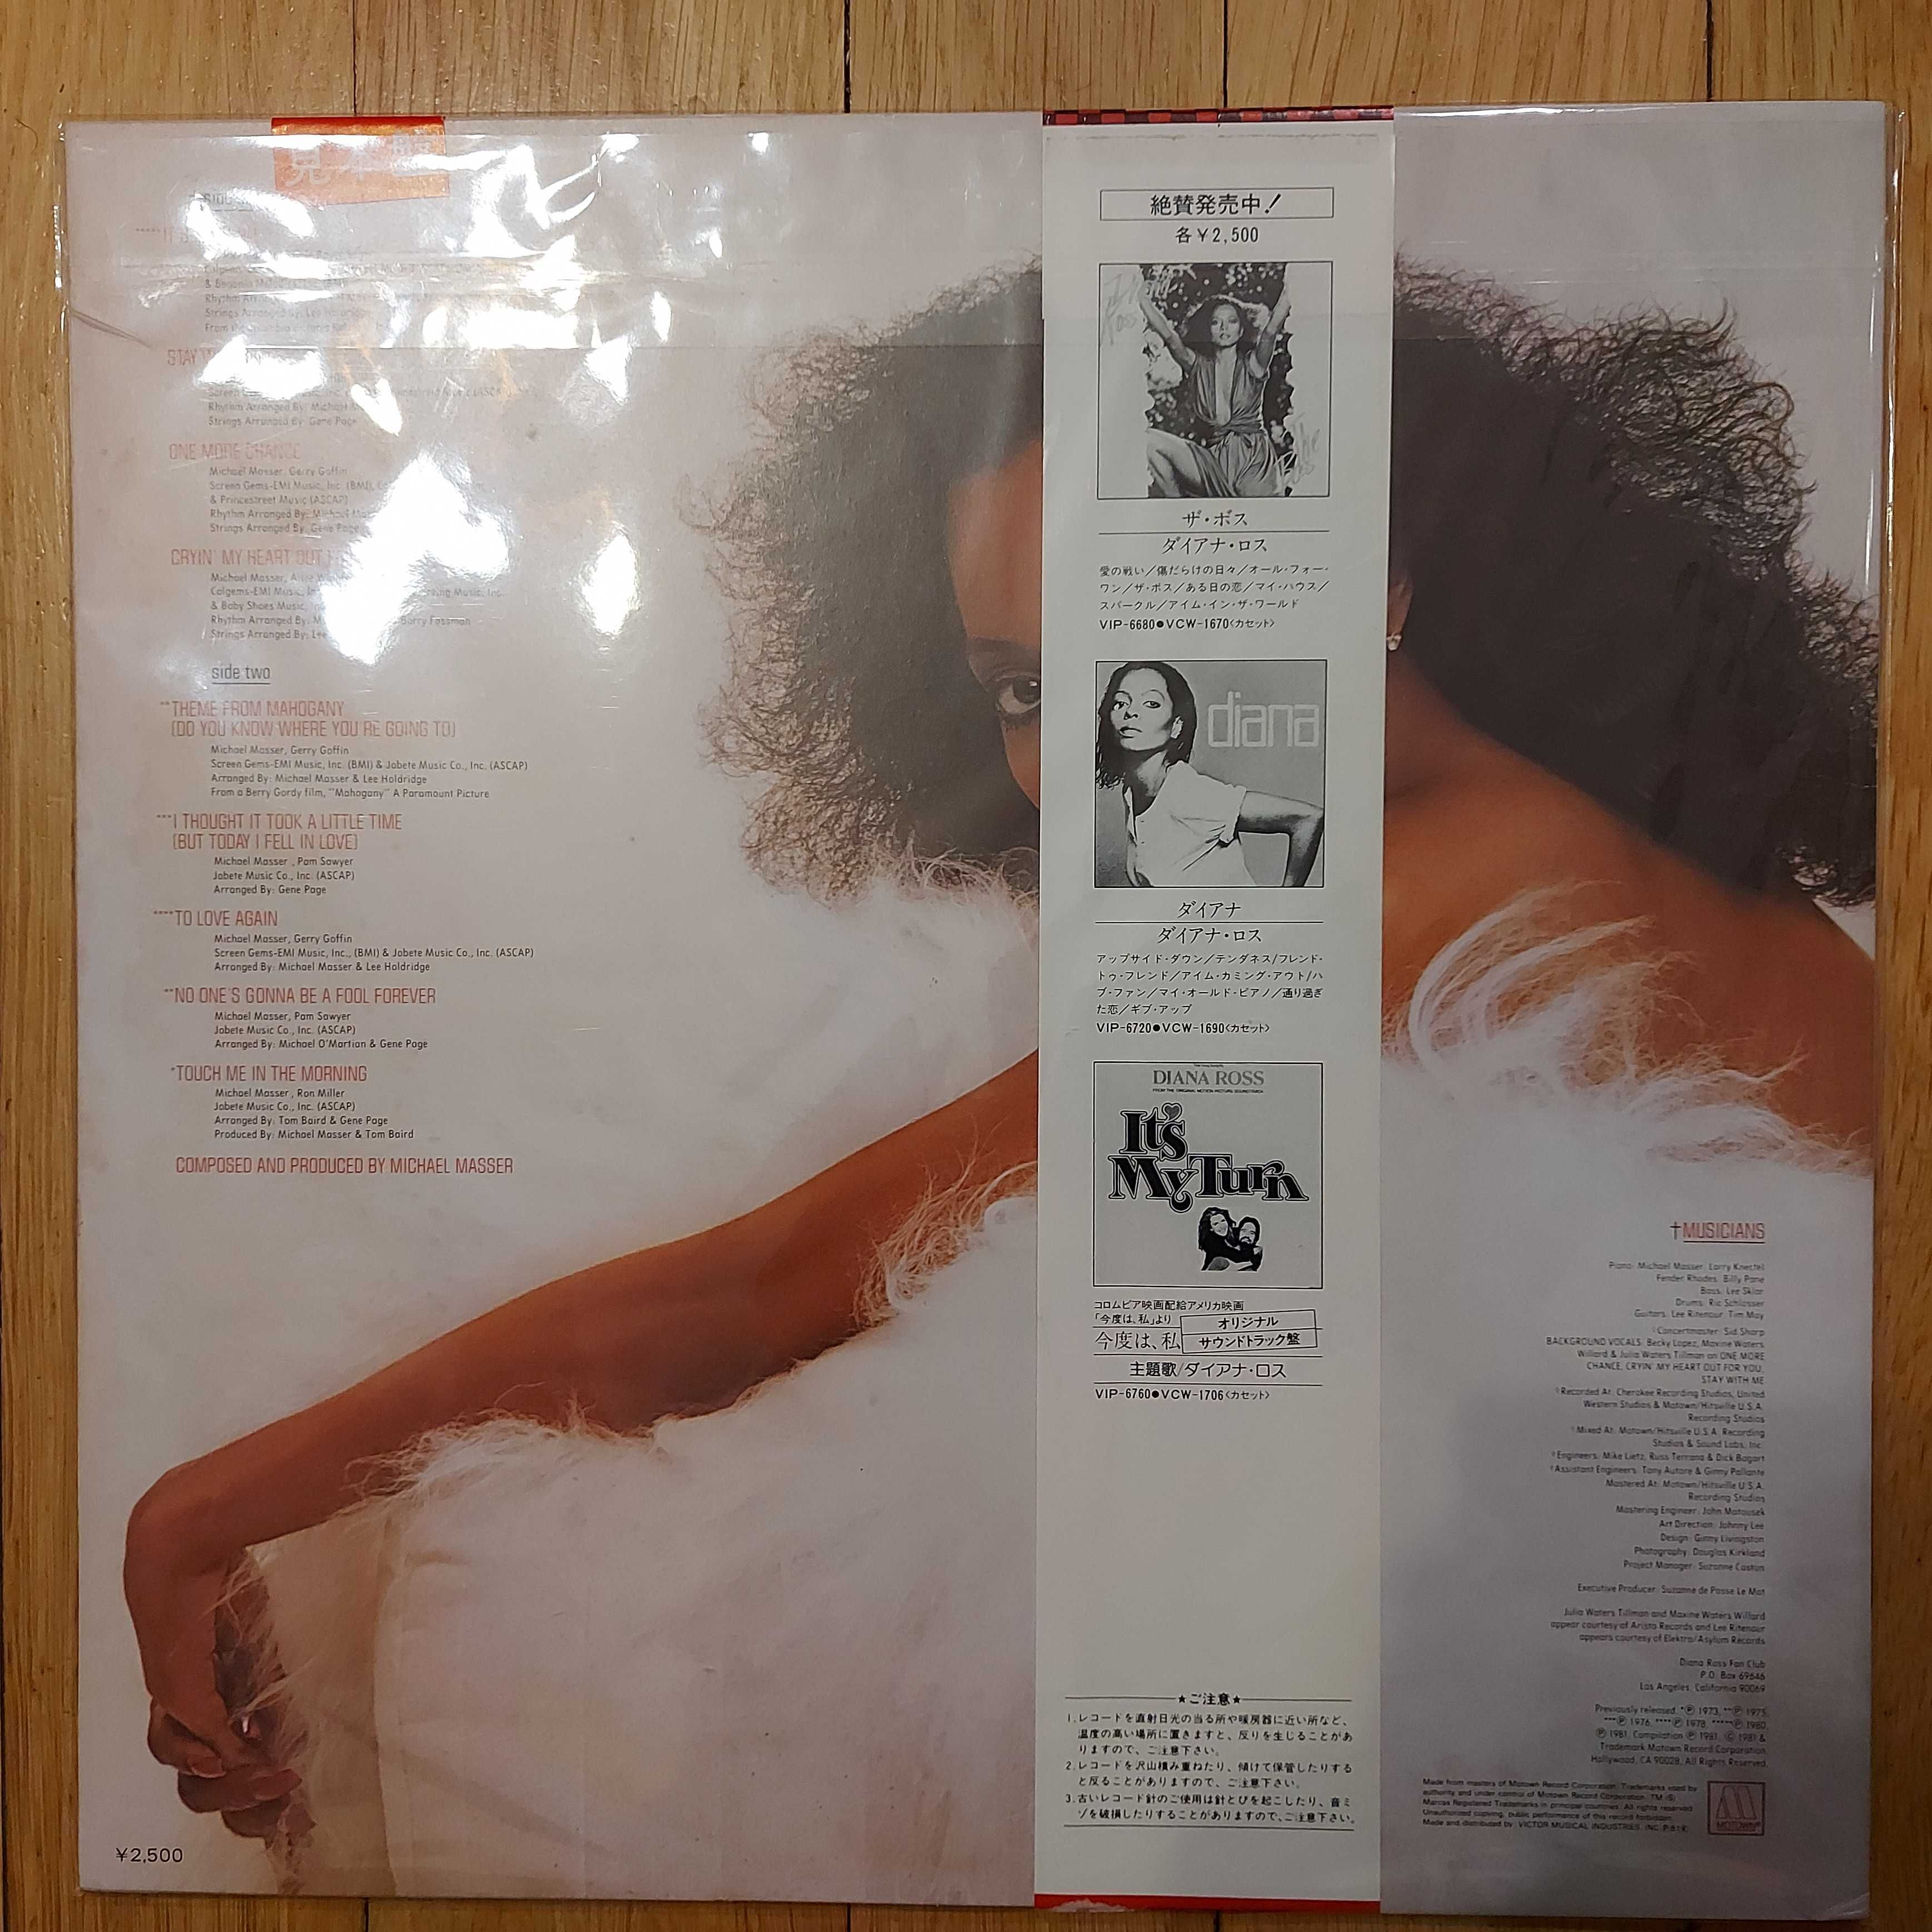 Diana Ross  To Love Again  1981 PROMO Japan (M-/M-) + inne tytuły